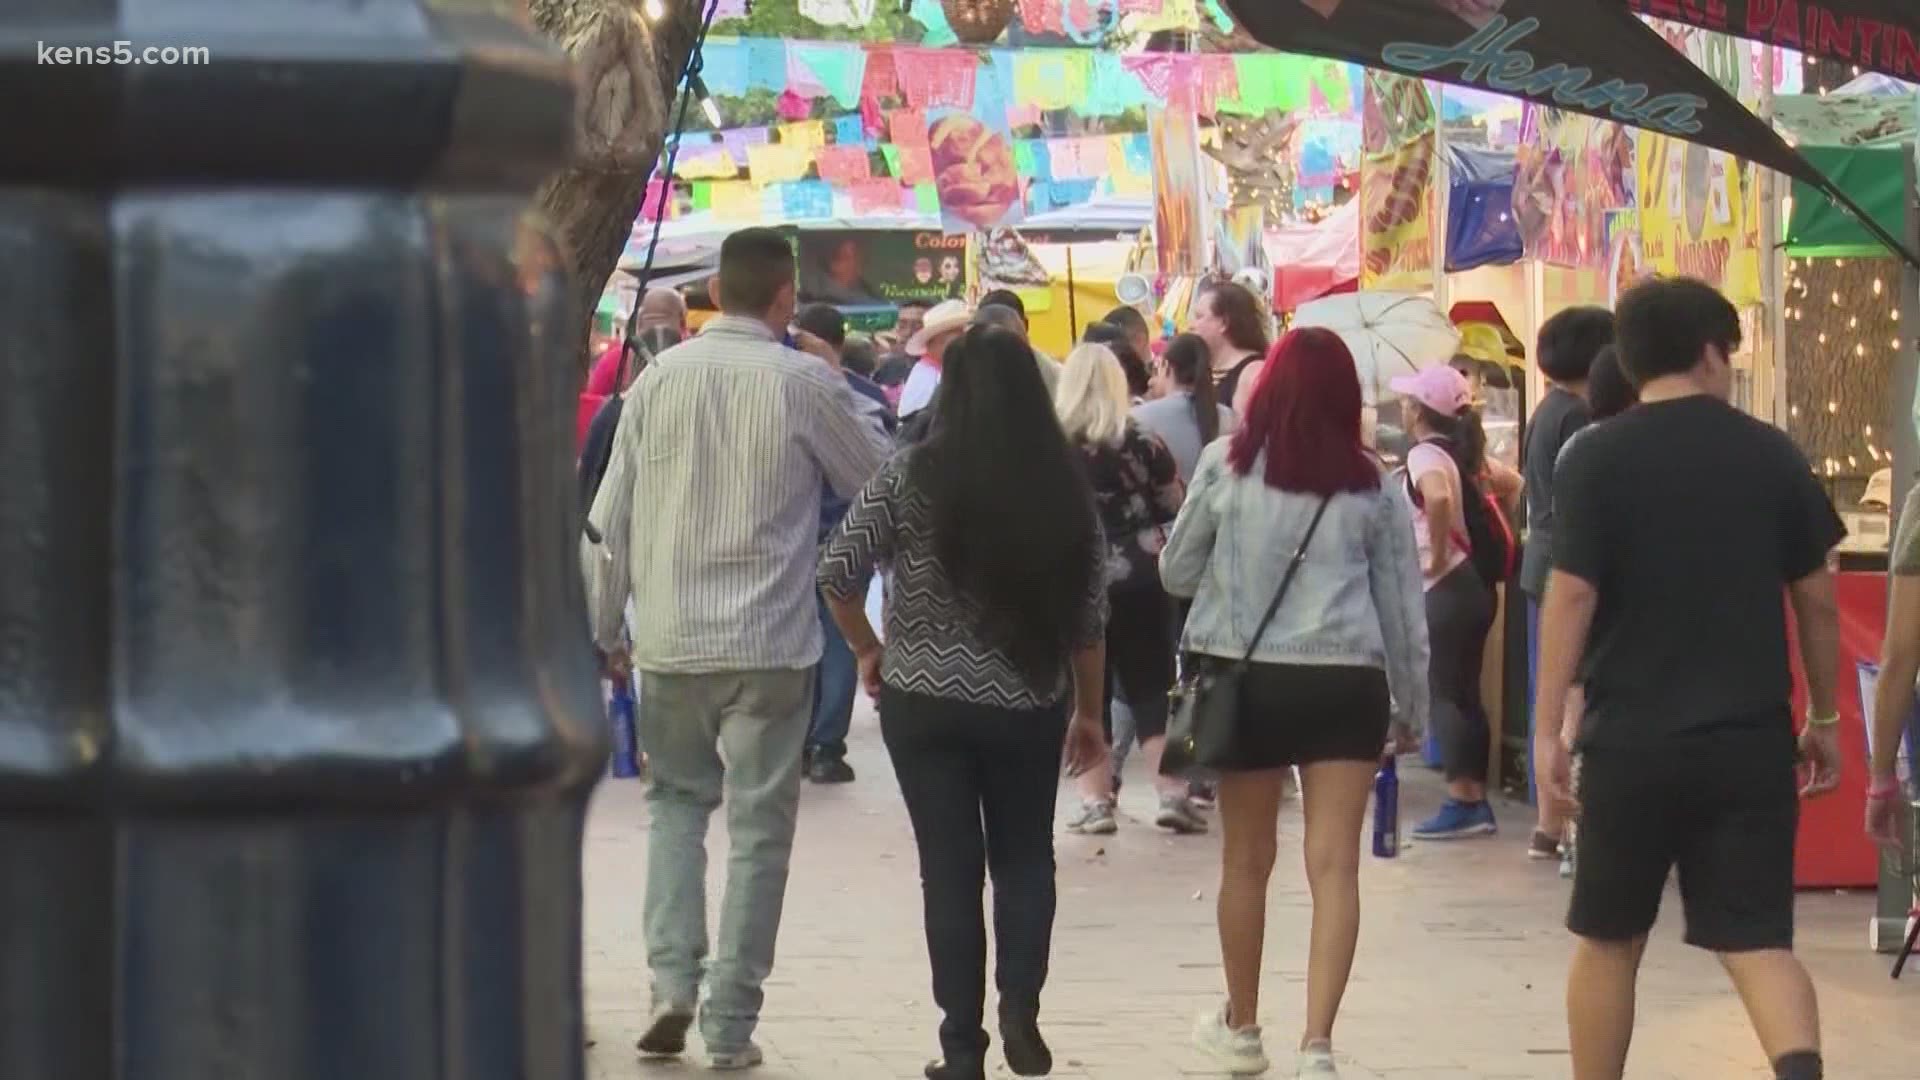 San Antonio's Fiesta has been rescheduled, parades canceled